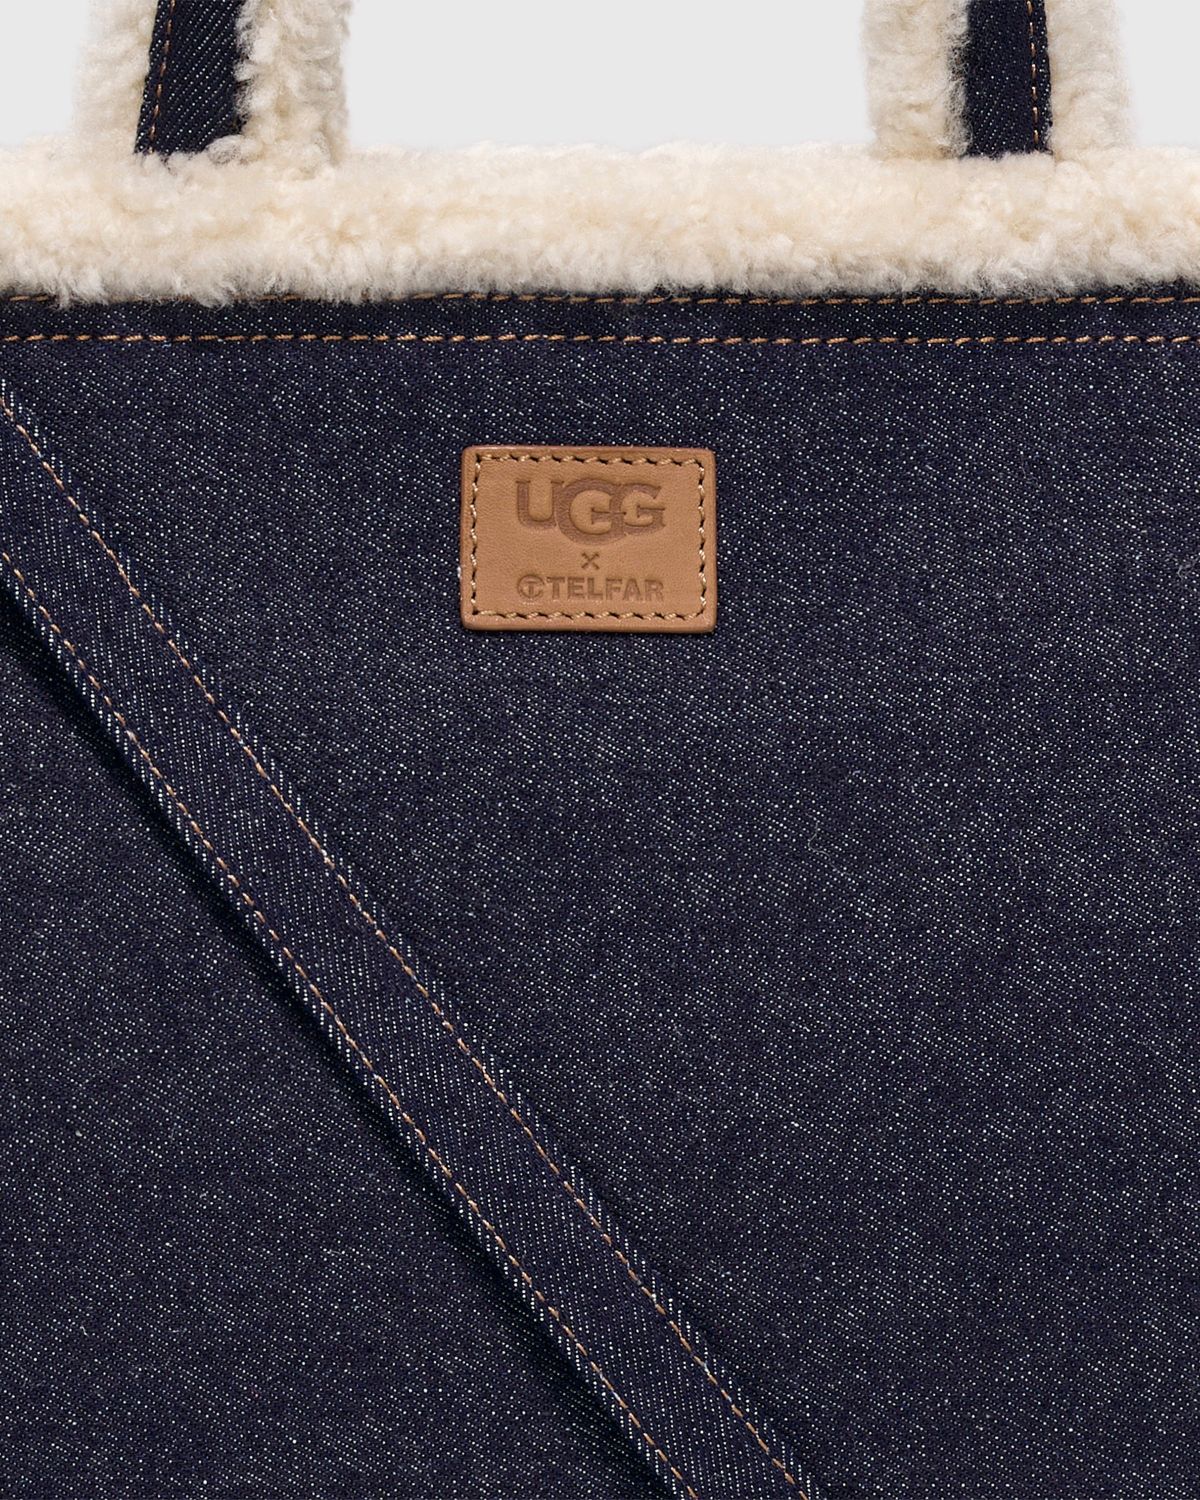 Telfar & UGG's Denim Collab Has Bags, Boots & Indigo Undies